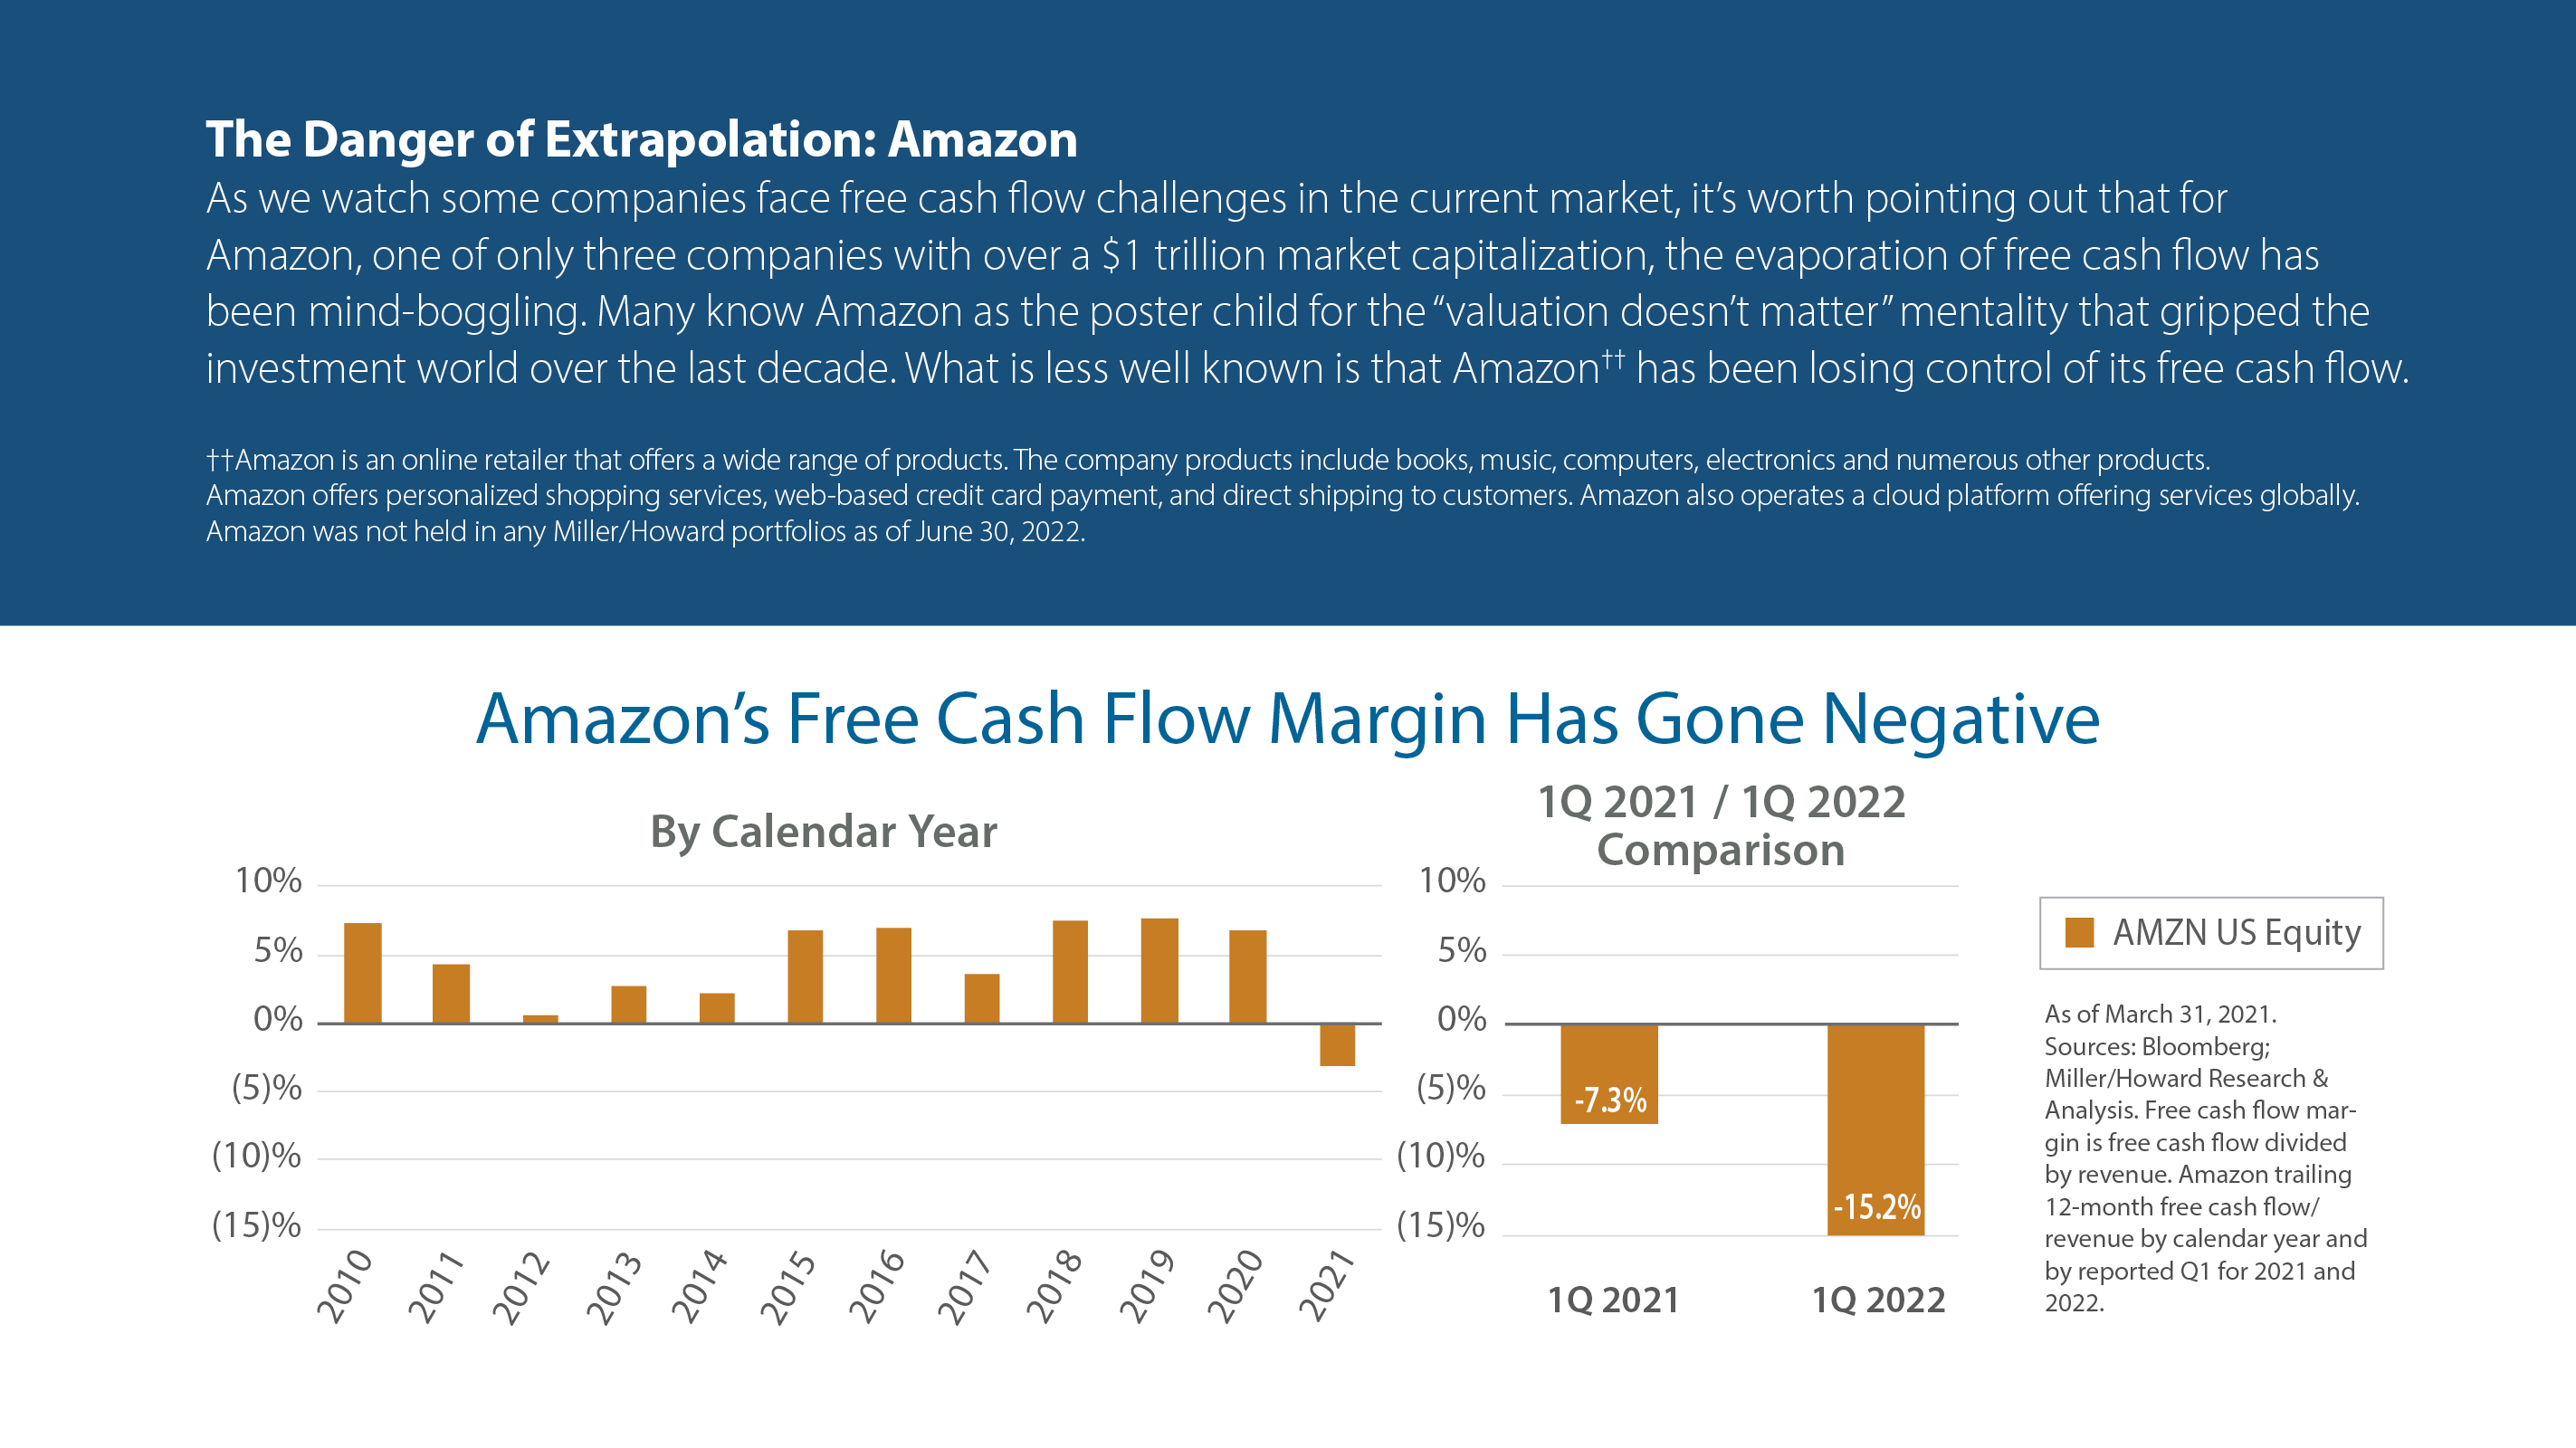 Amazon’s Free Cash Flow Margin Has Gone Negative